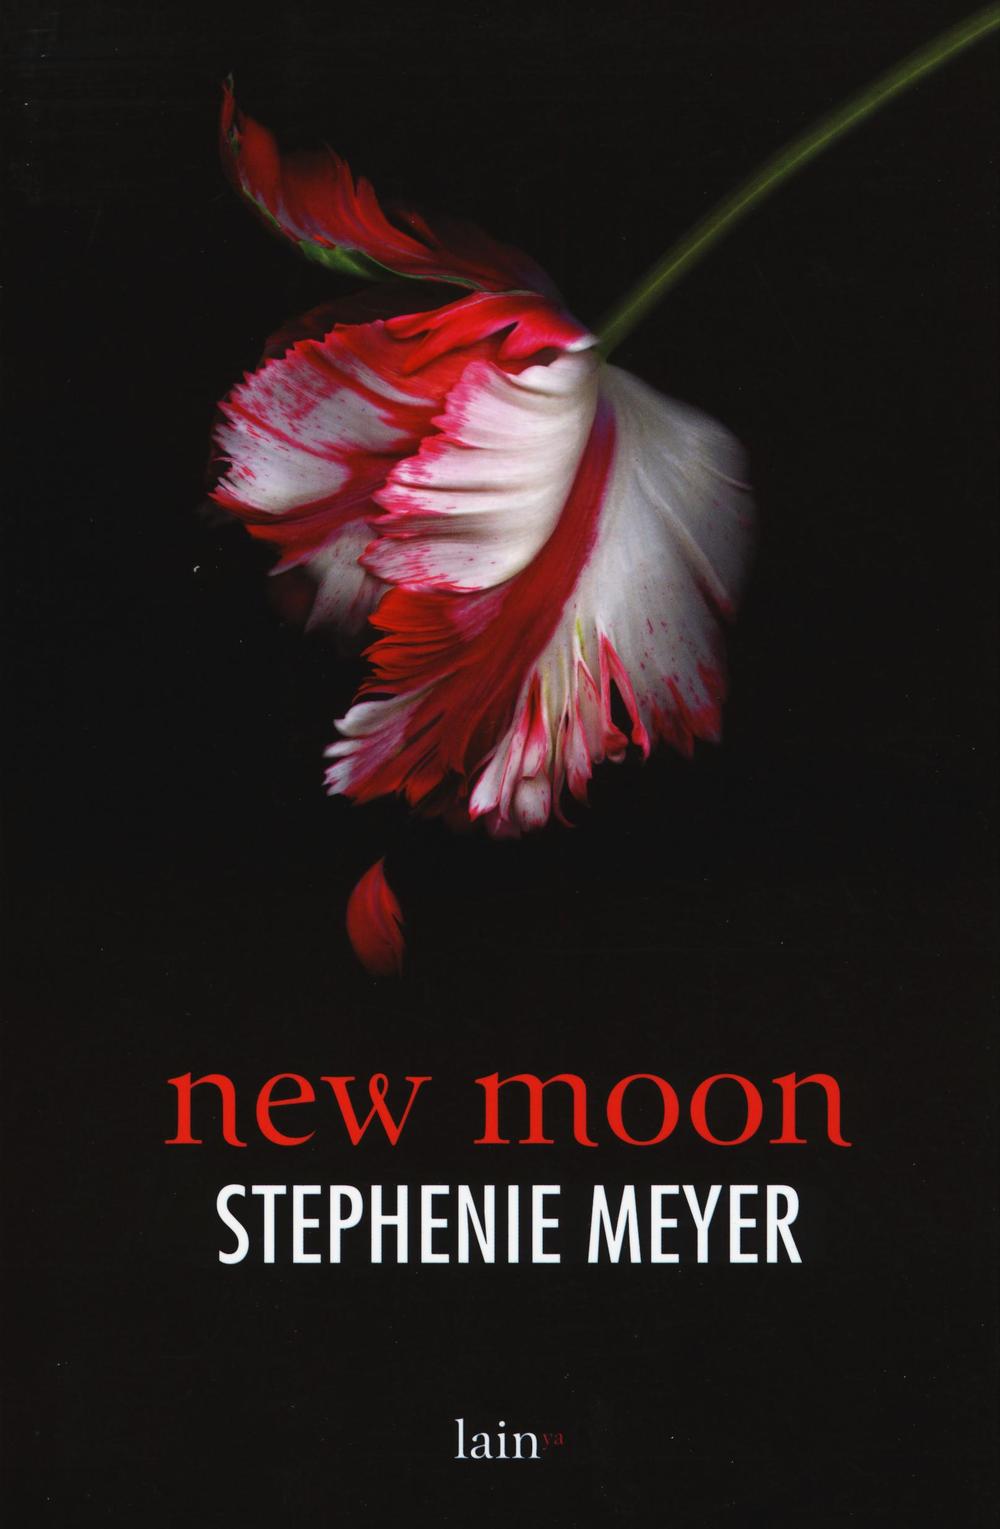 Book New moon Stephenie Meyer